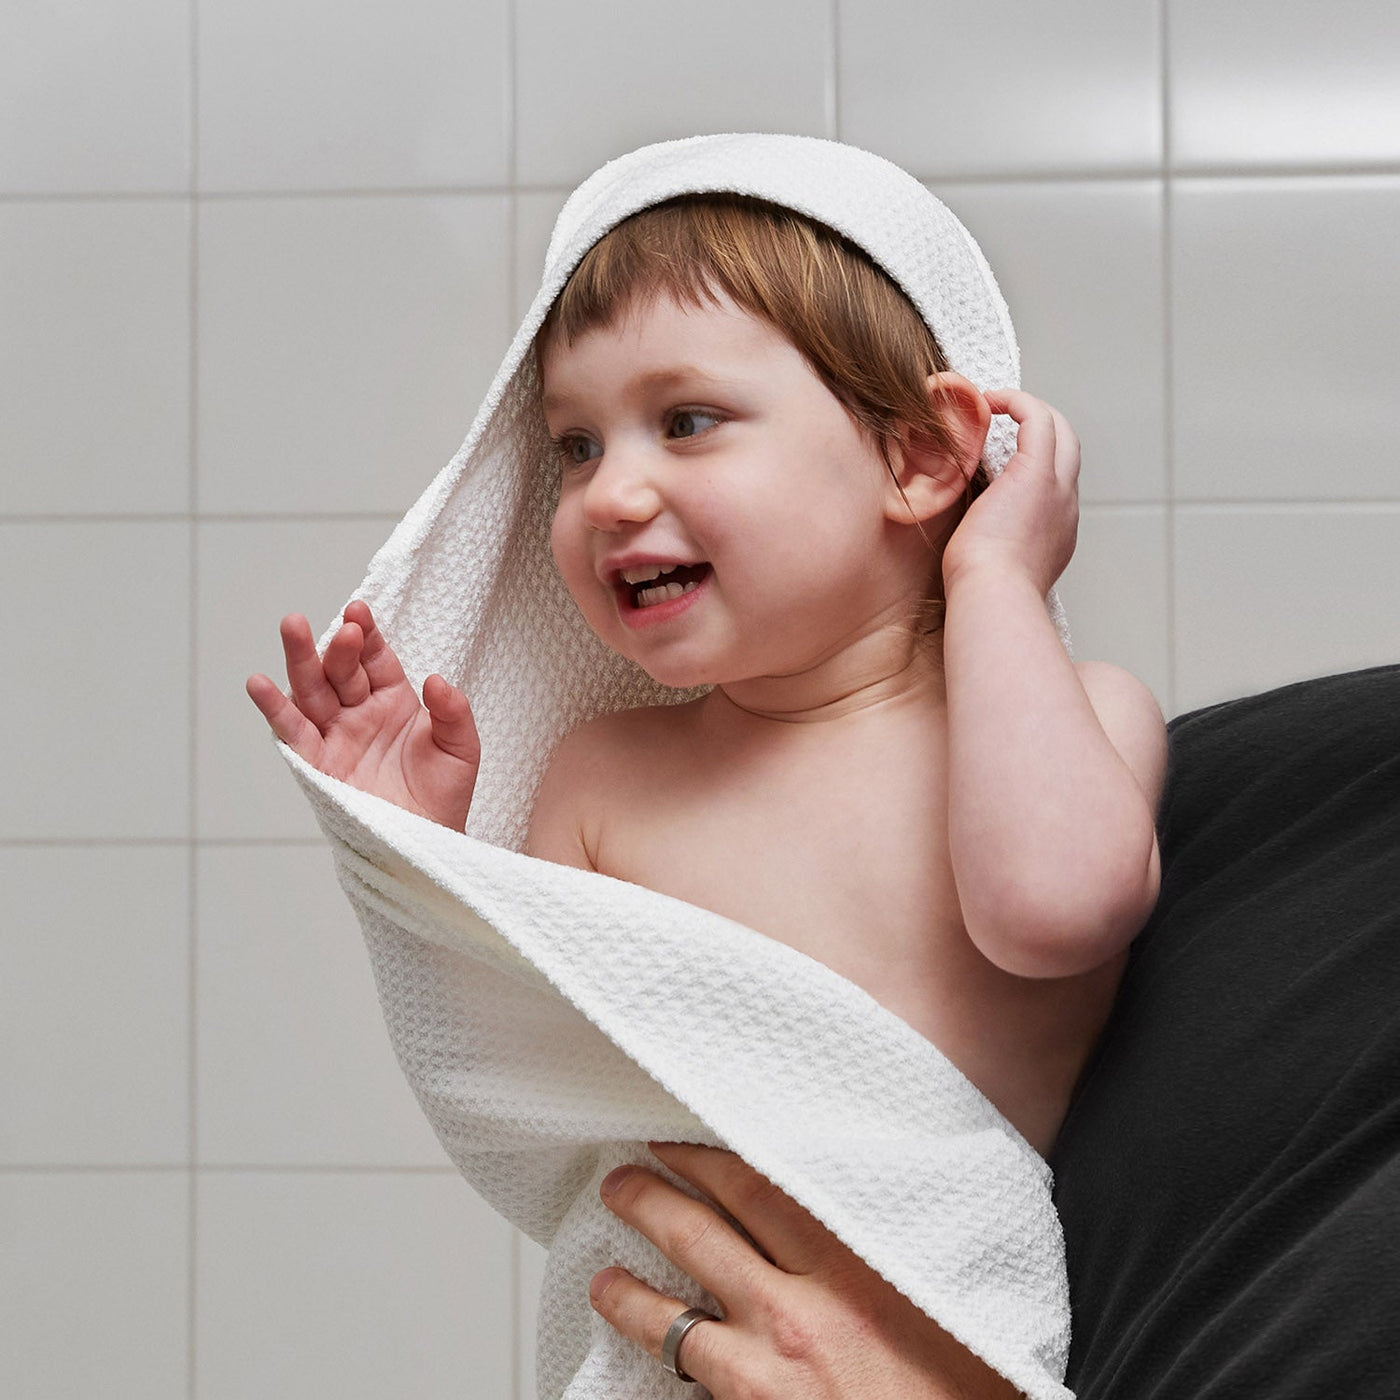 Baby Hooded Bath Towels